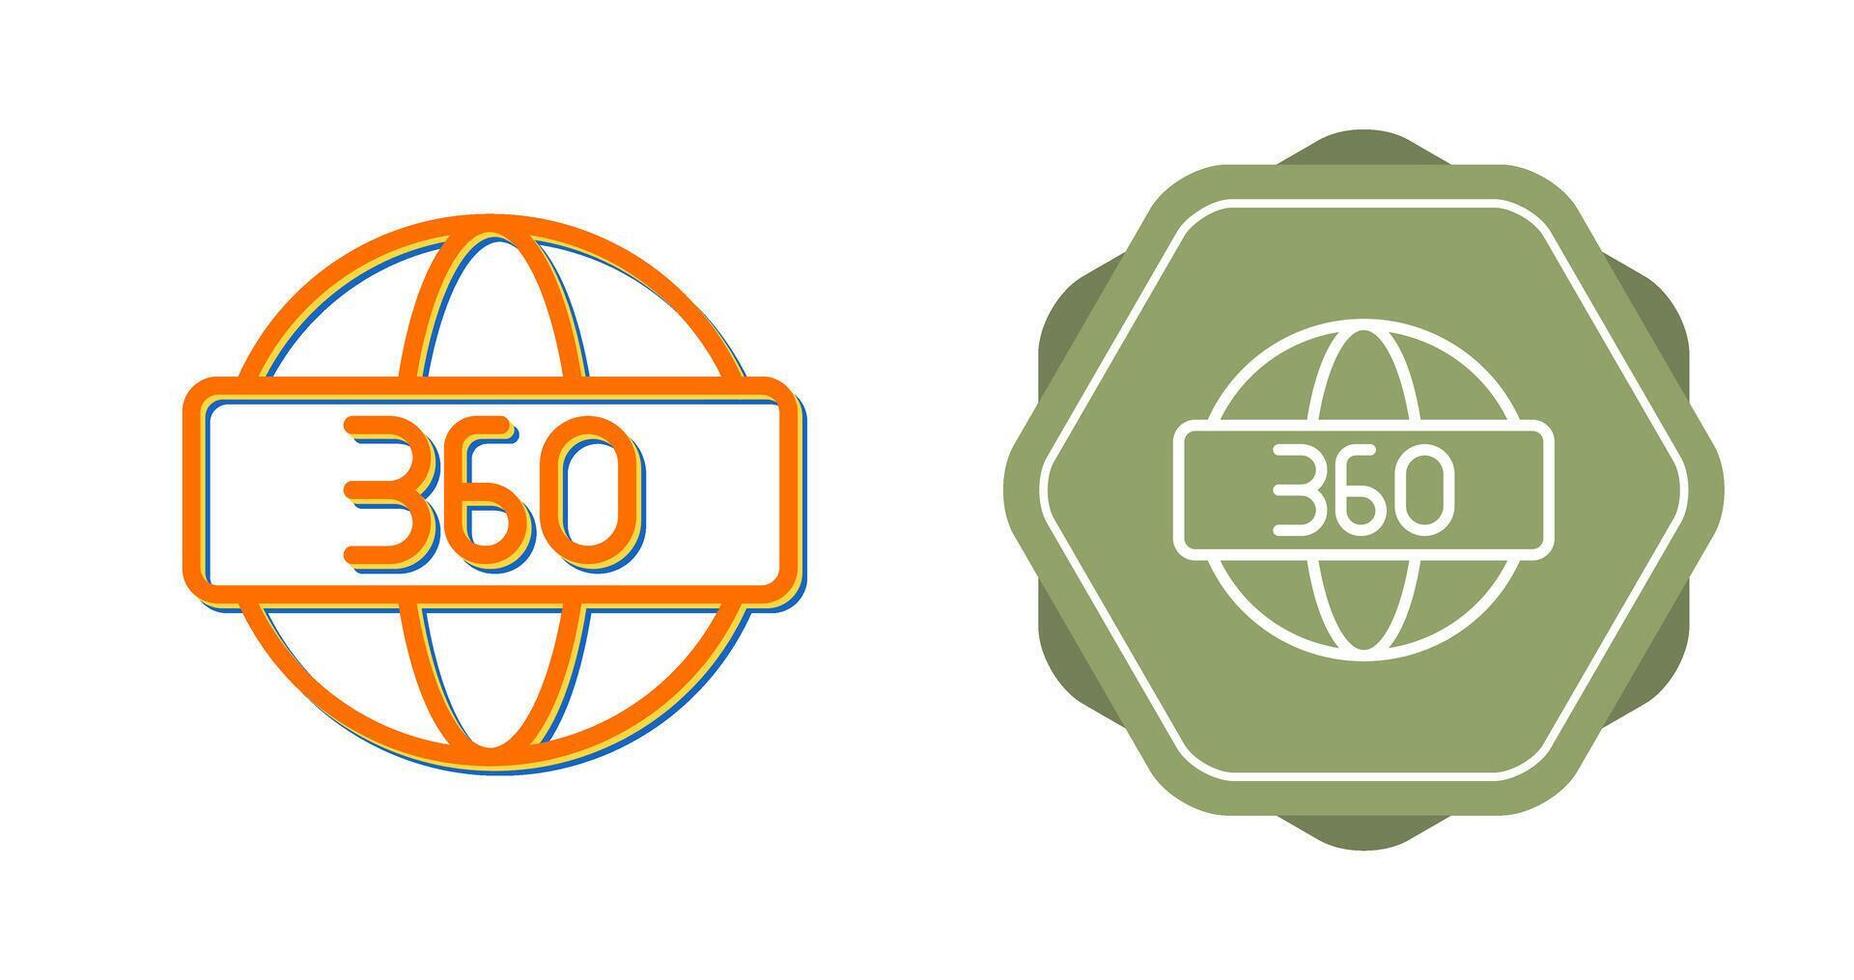 360 Degrees Vector Icon